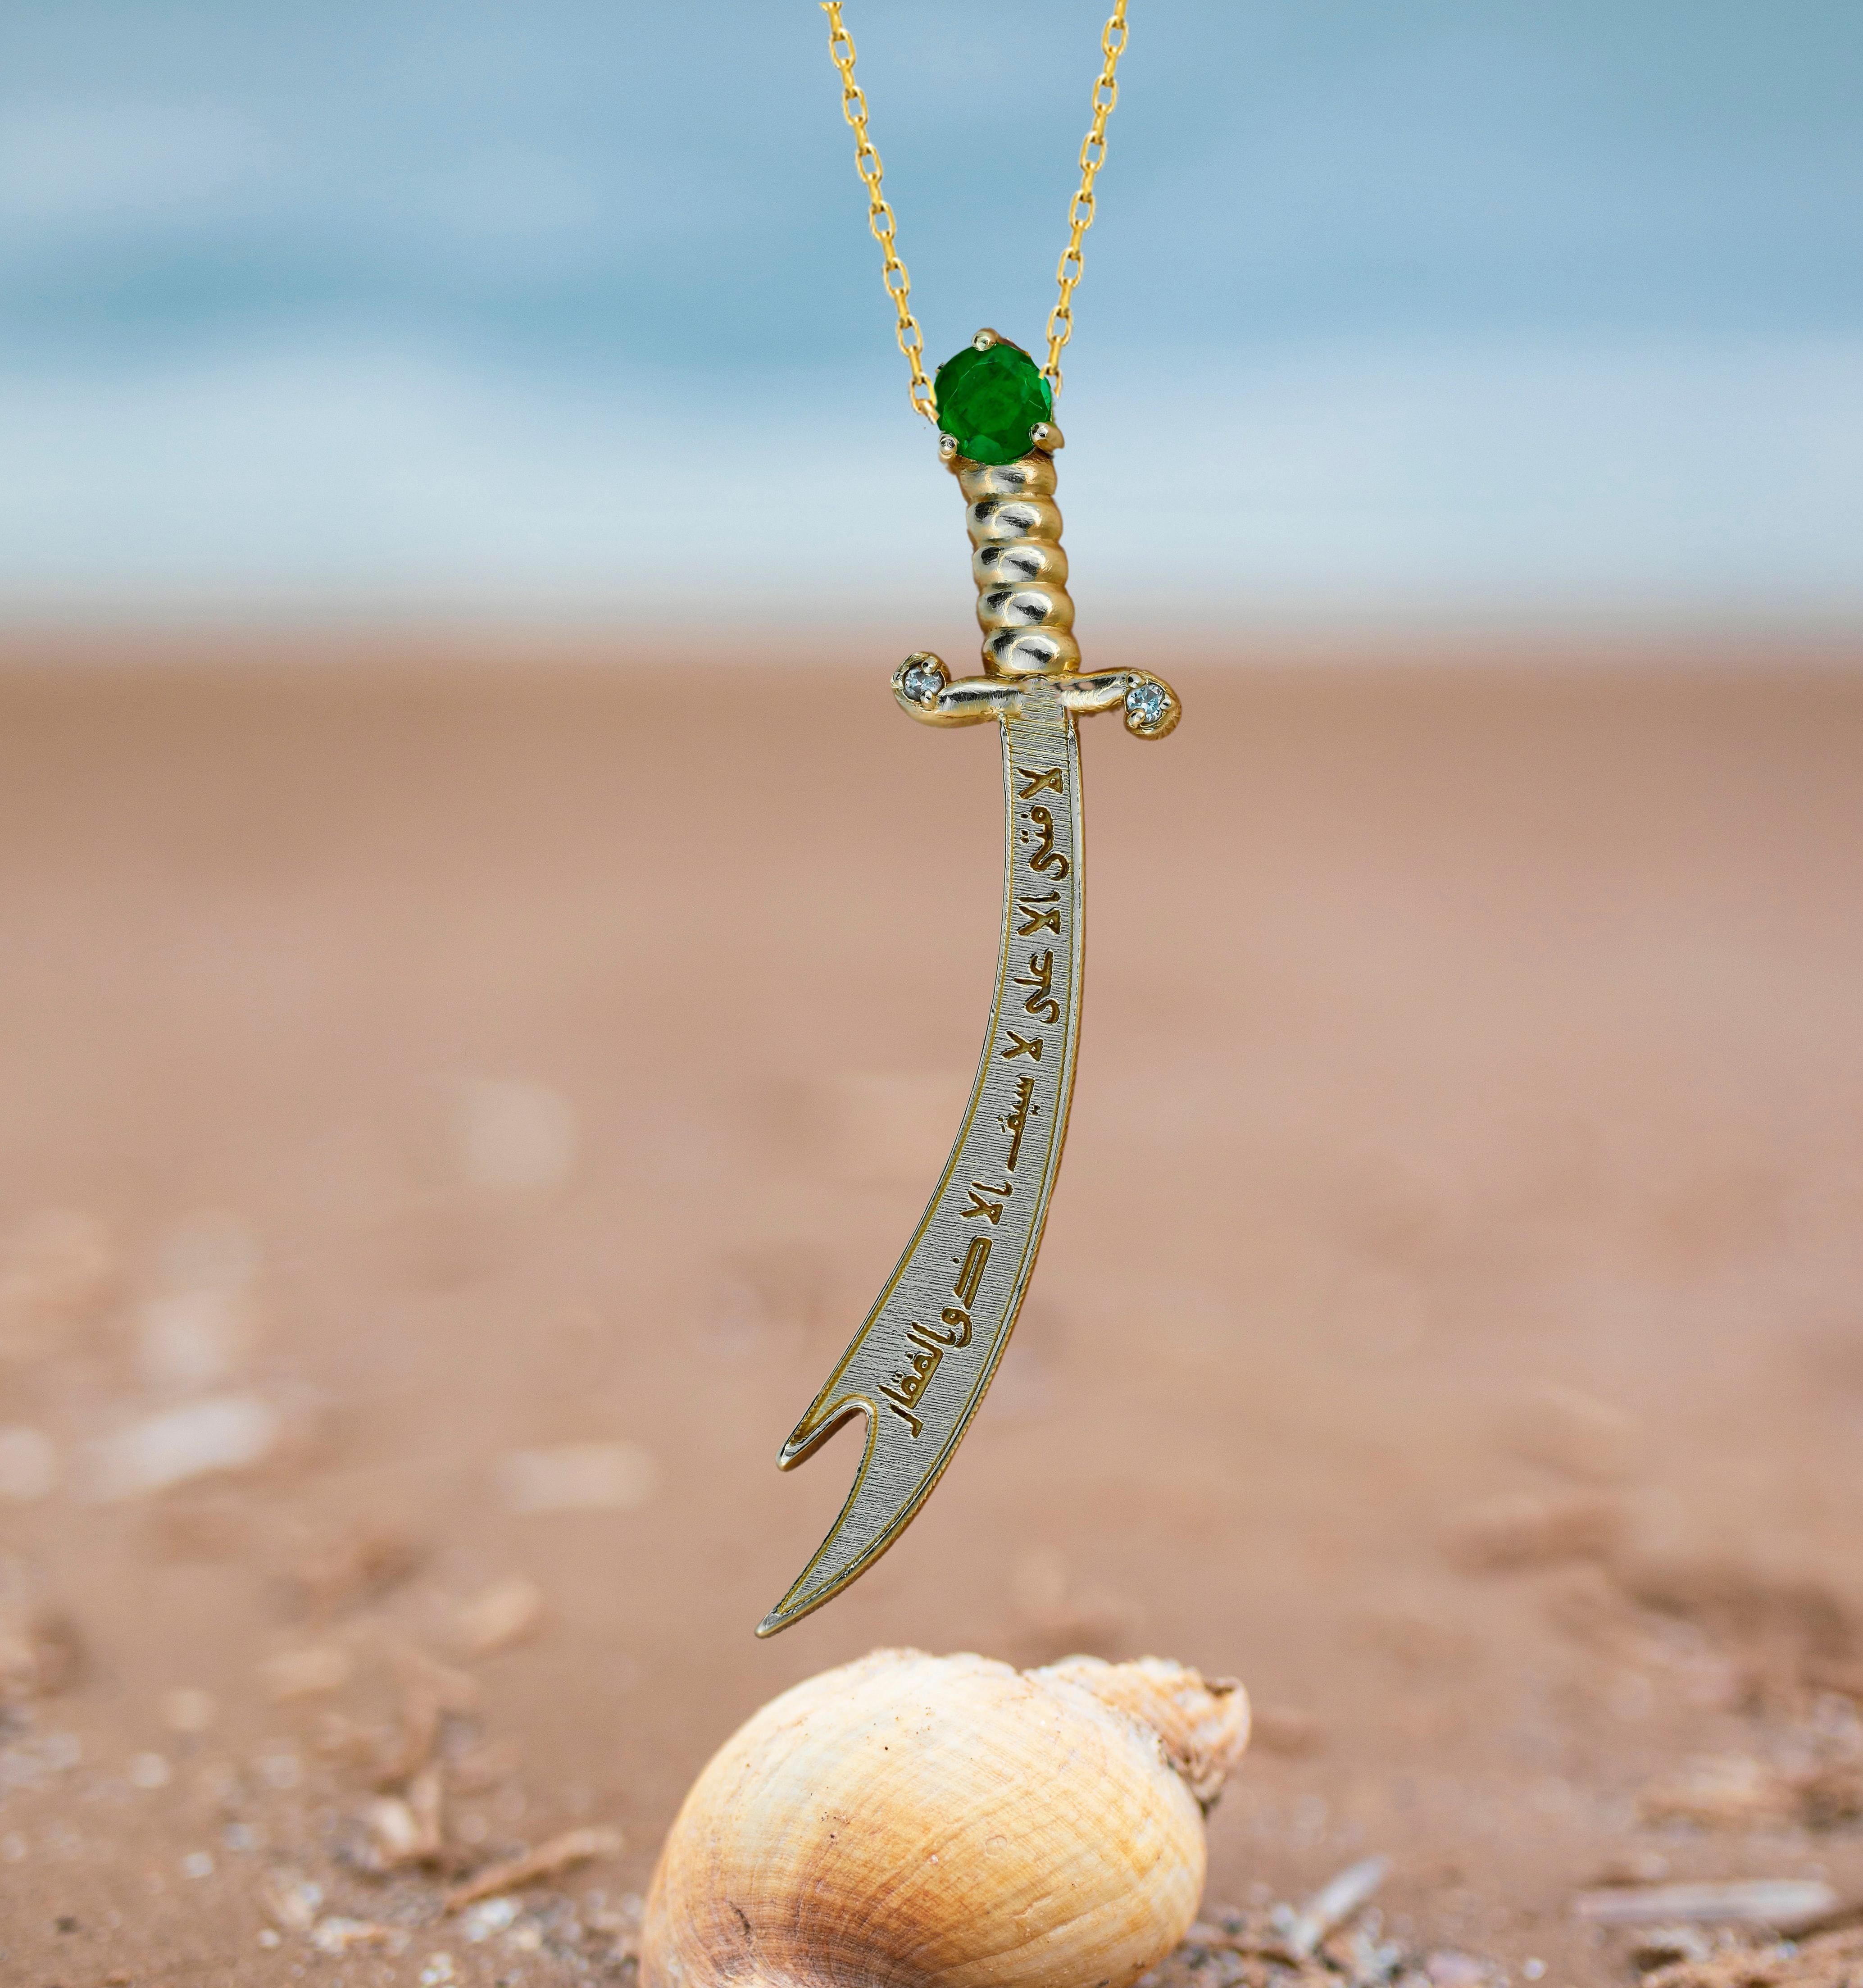 Solid 14 kt solid gold zulfiqar sword pendant with natural emerald and diamonds. May birthstone.
Islamic Hazrat Imam Ali ibn Abi Talib علي Zulfiqar Zulfikar double Sword.
Size: 35 x 7.5 mm.
Total weight: 1.70 g.

Gemstones:
Natural emerald: weight -